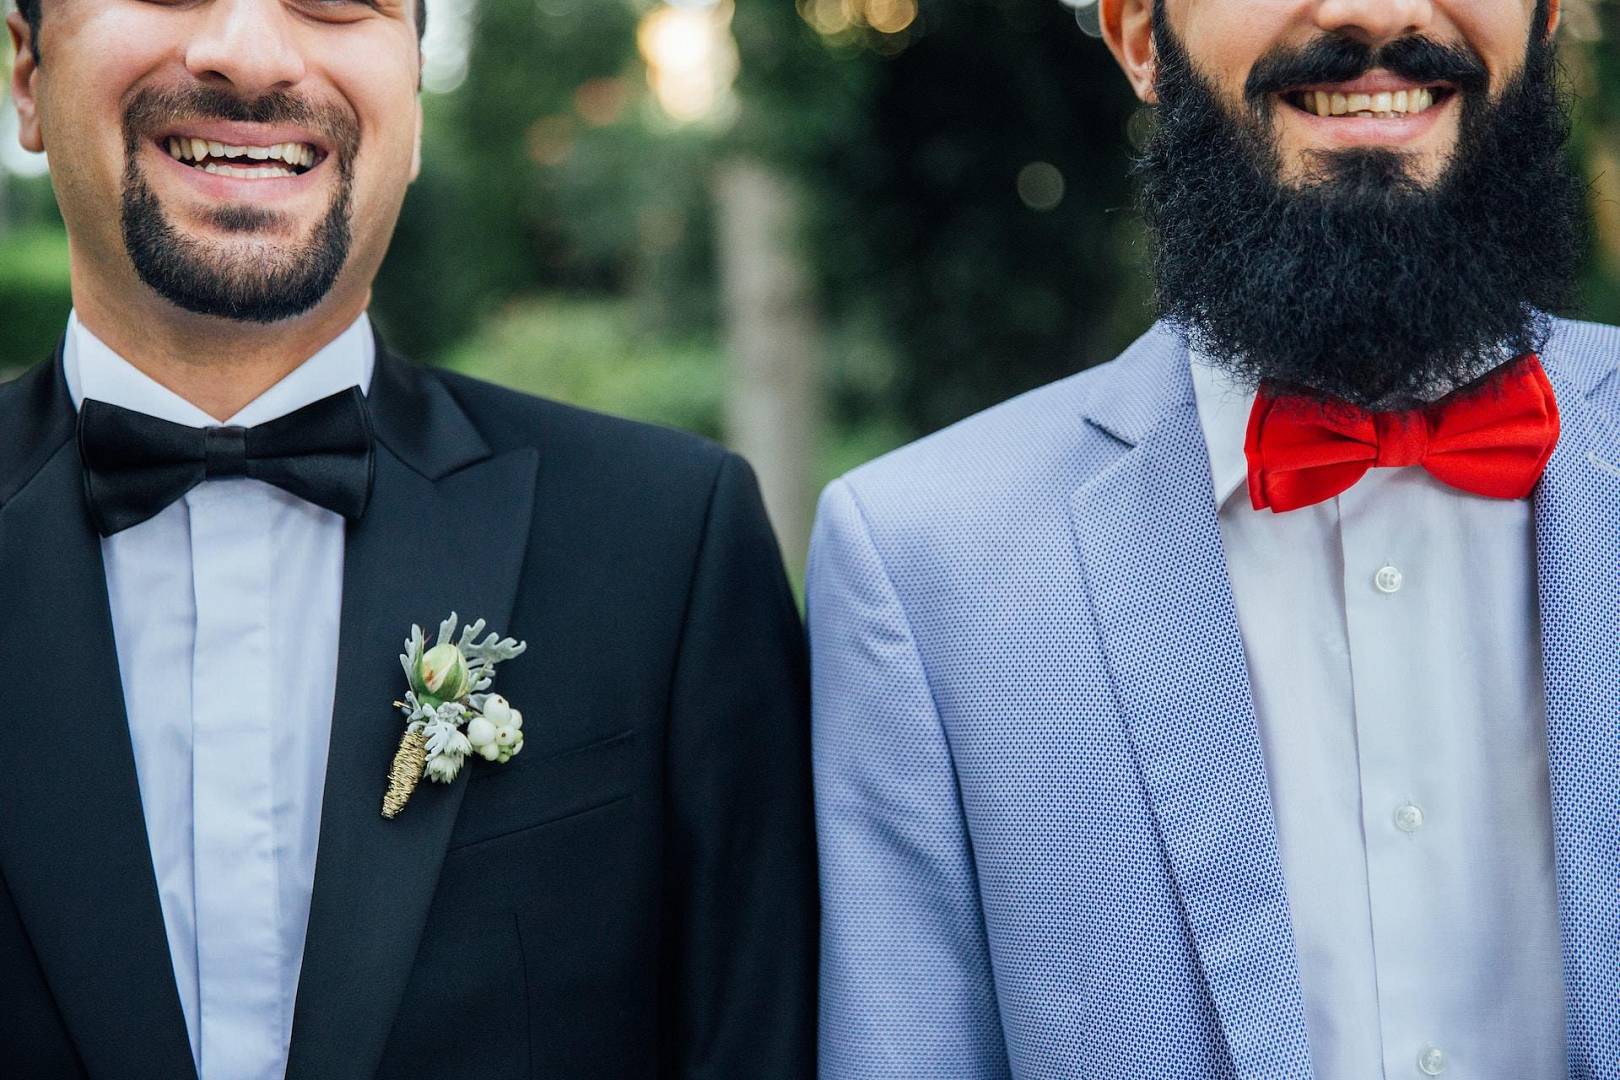 Organization of a wedding for a same-sex couple